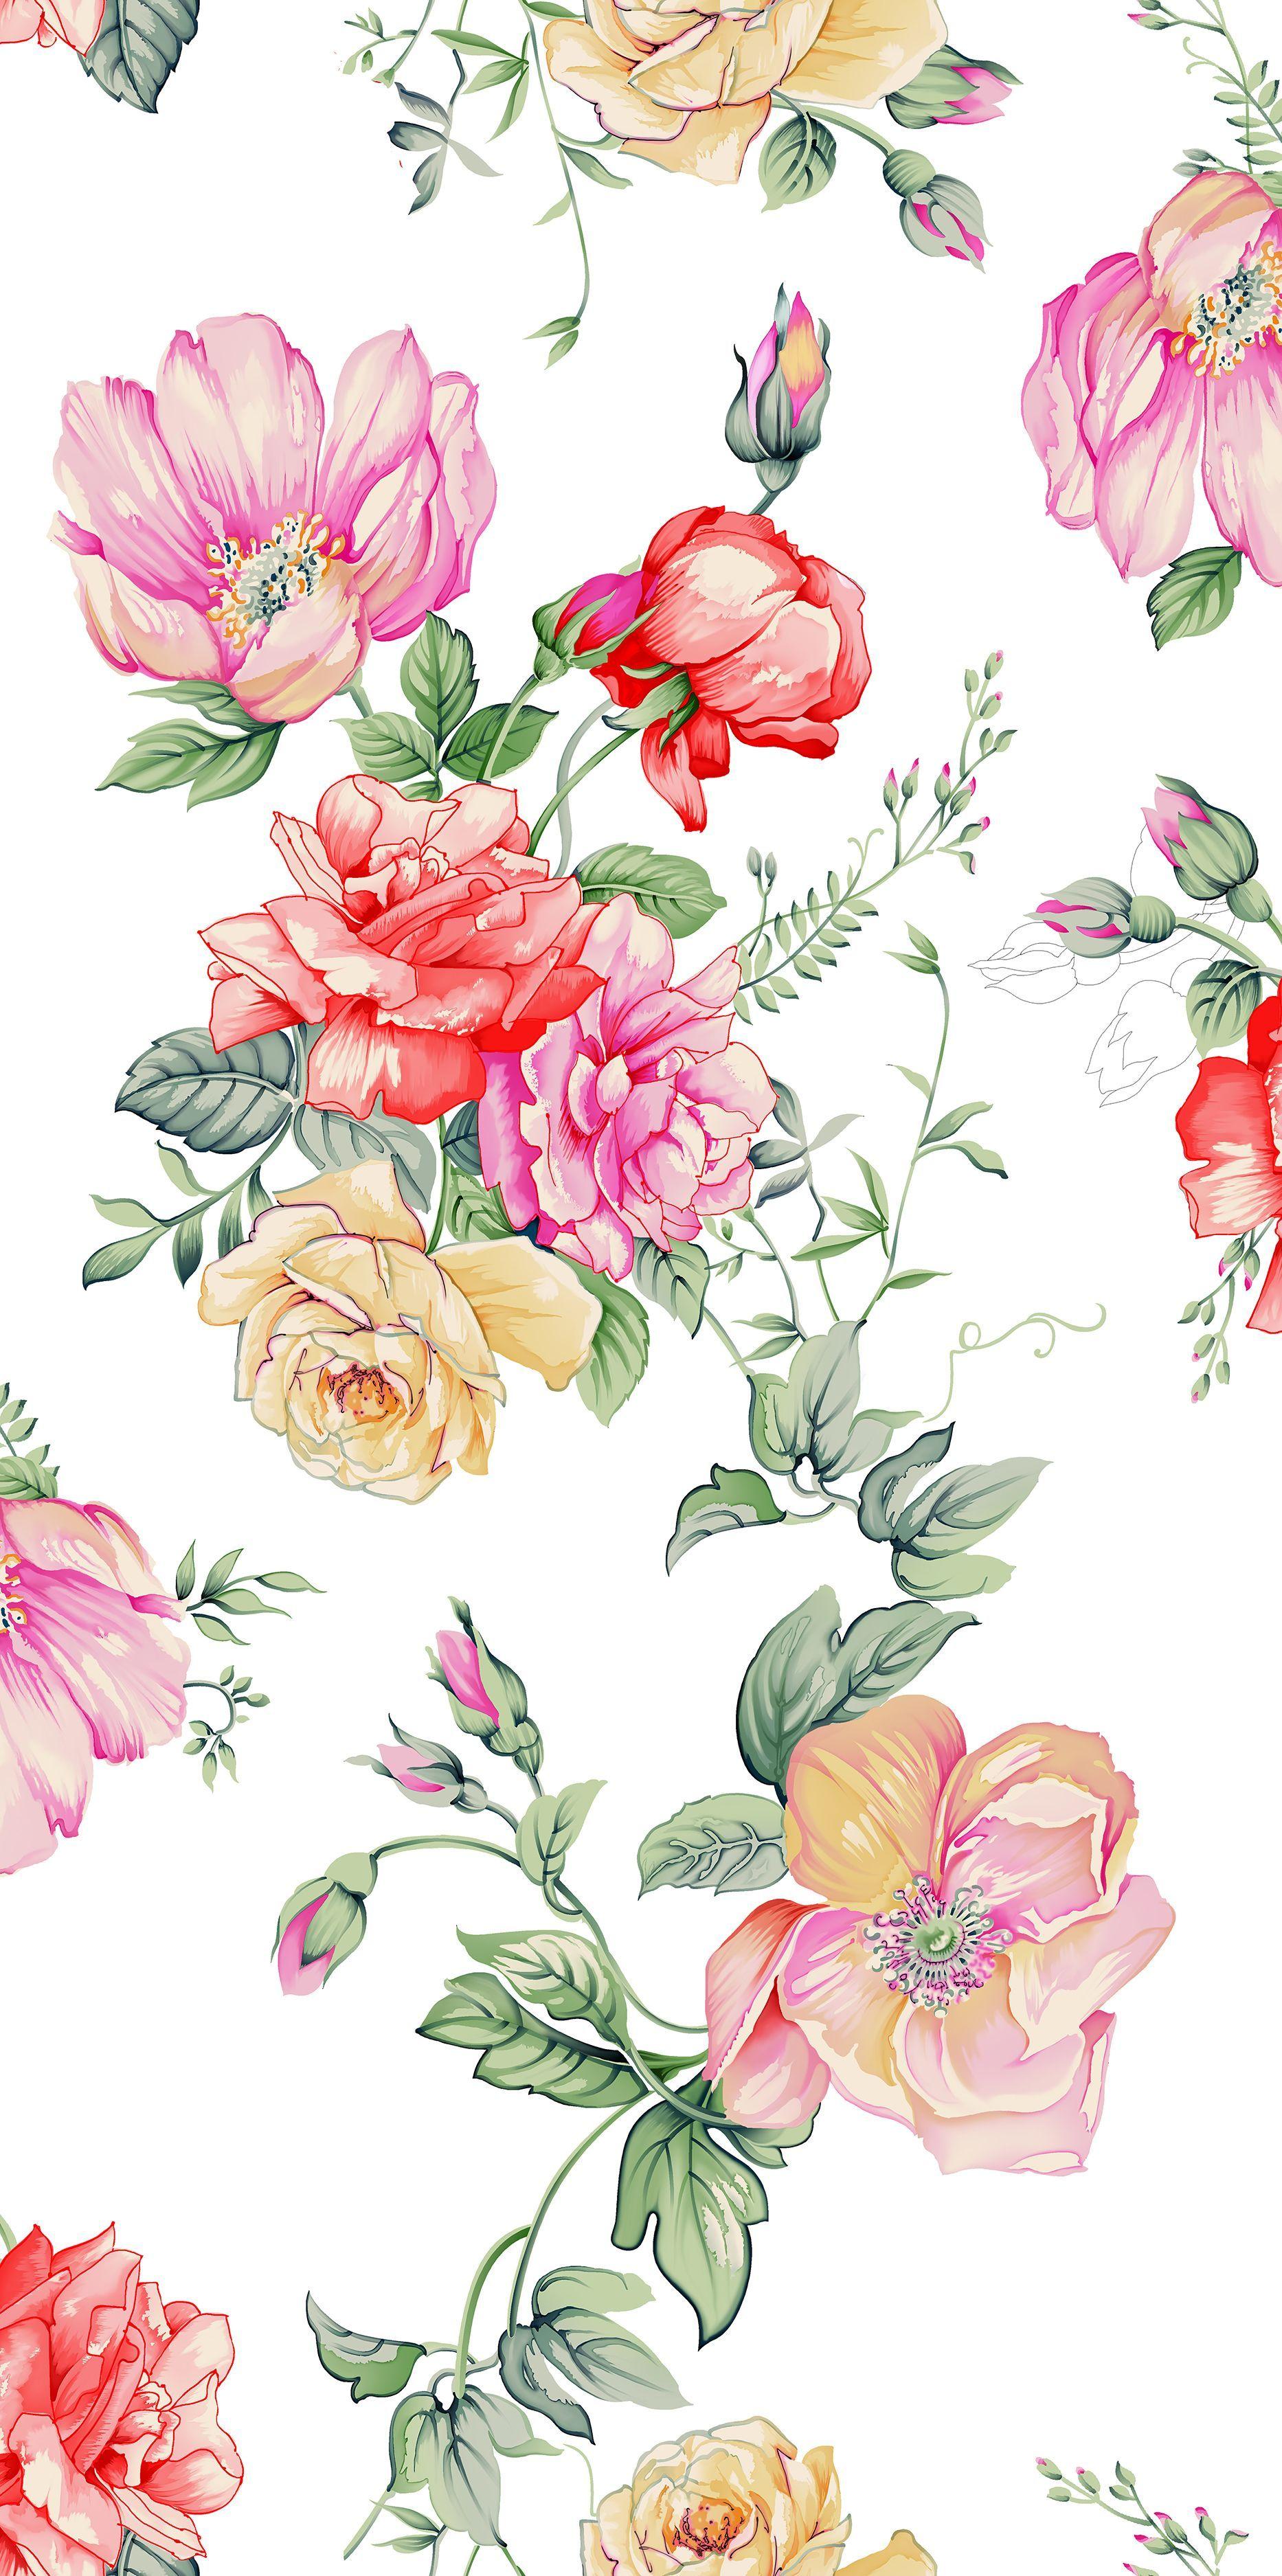 Watercolor Flower iPhone Wallpapers - Top Free Watercolor ...